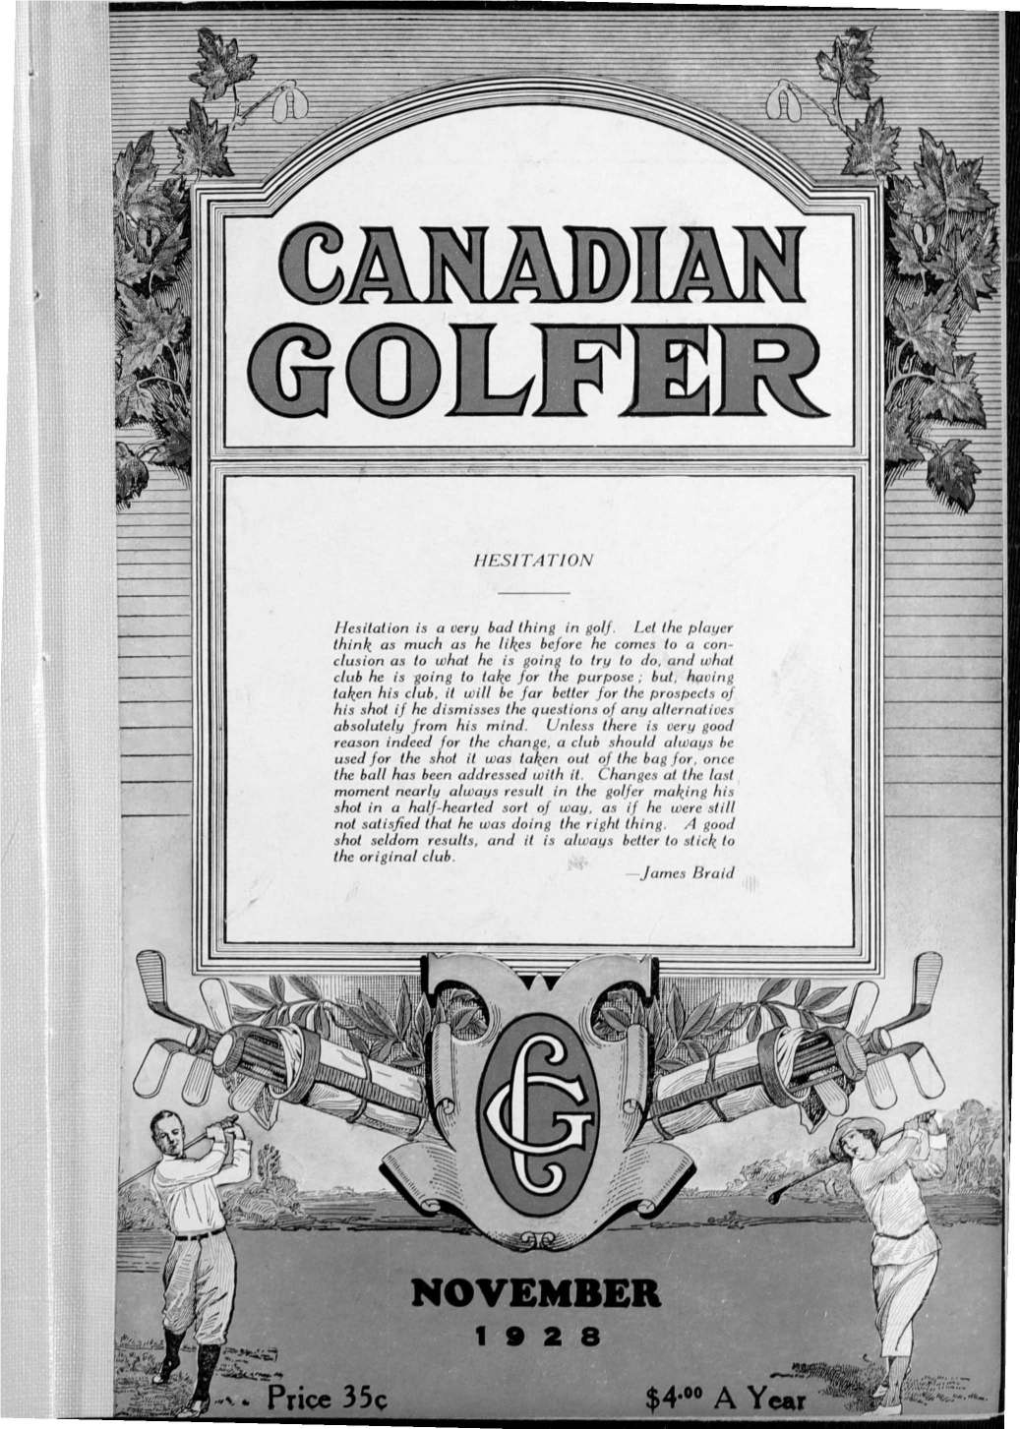 Canadian Golfer, November, 1928